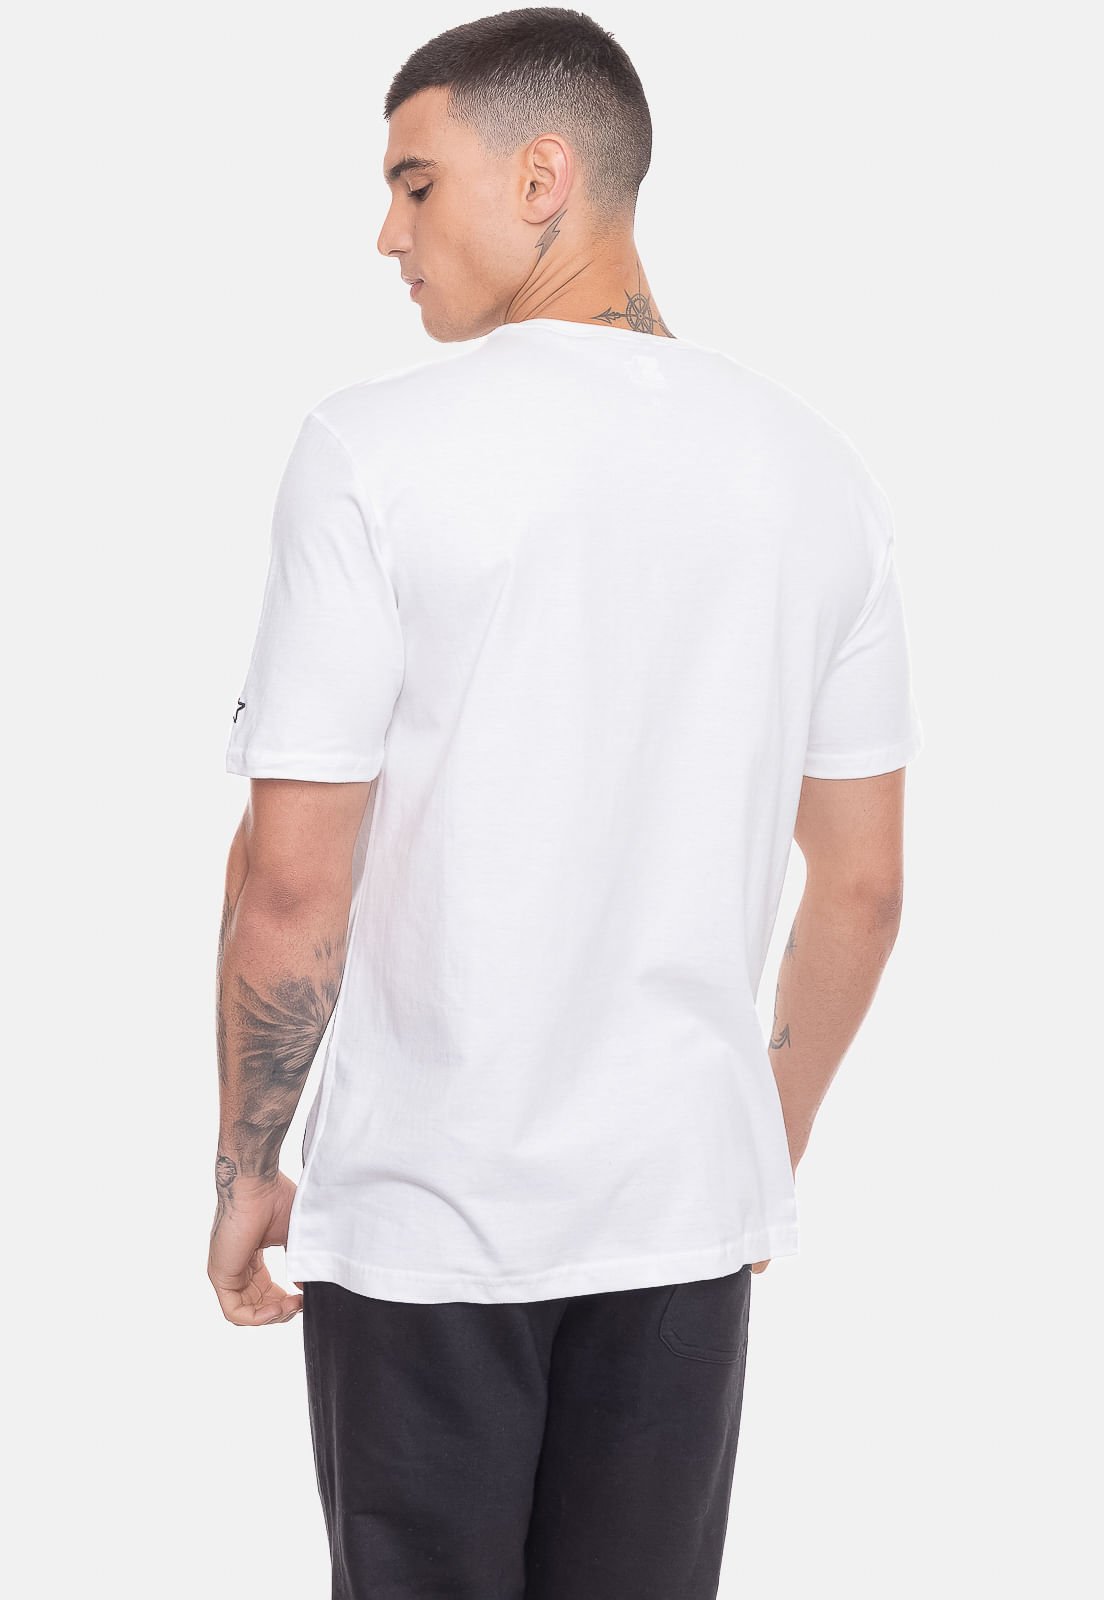 Camiseta Starter H A T Branca Branco 2